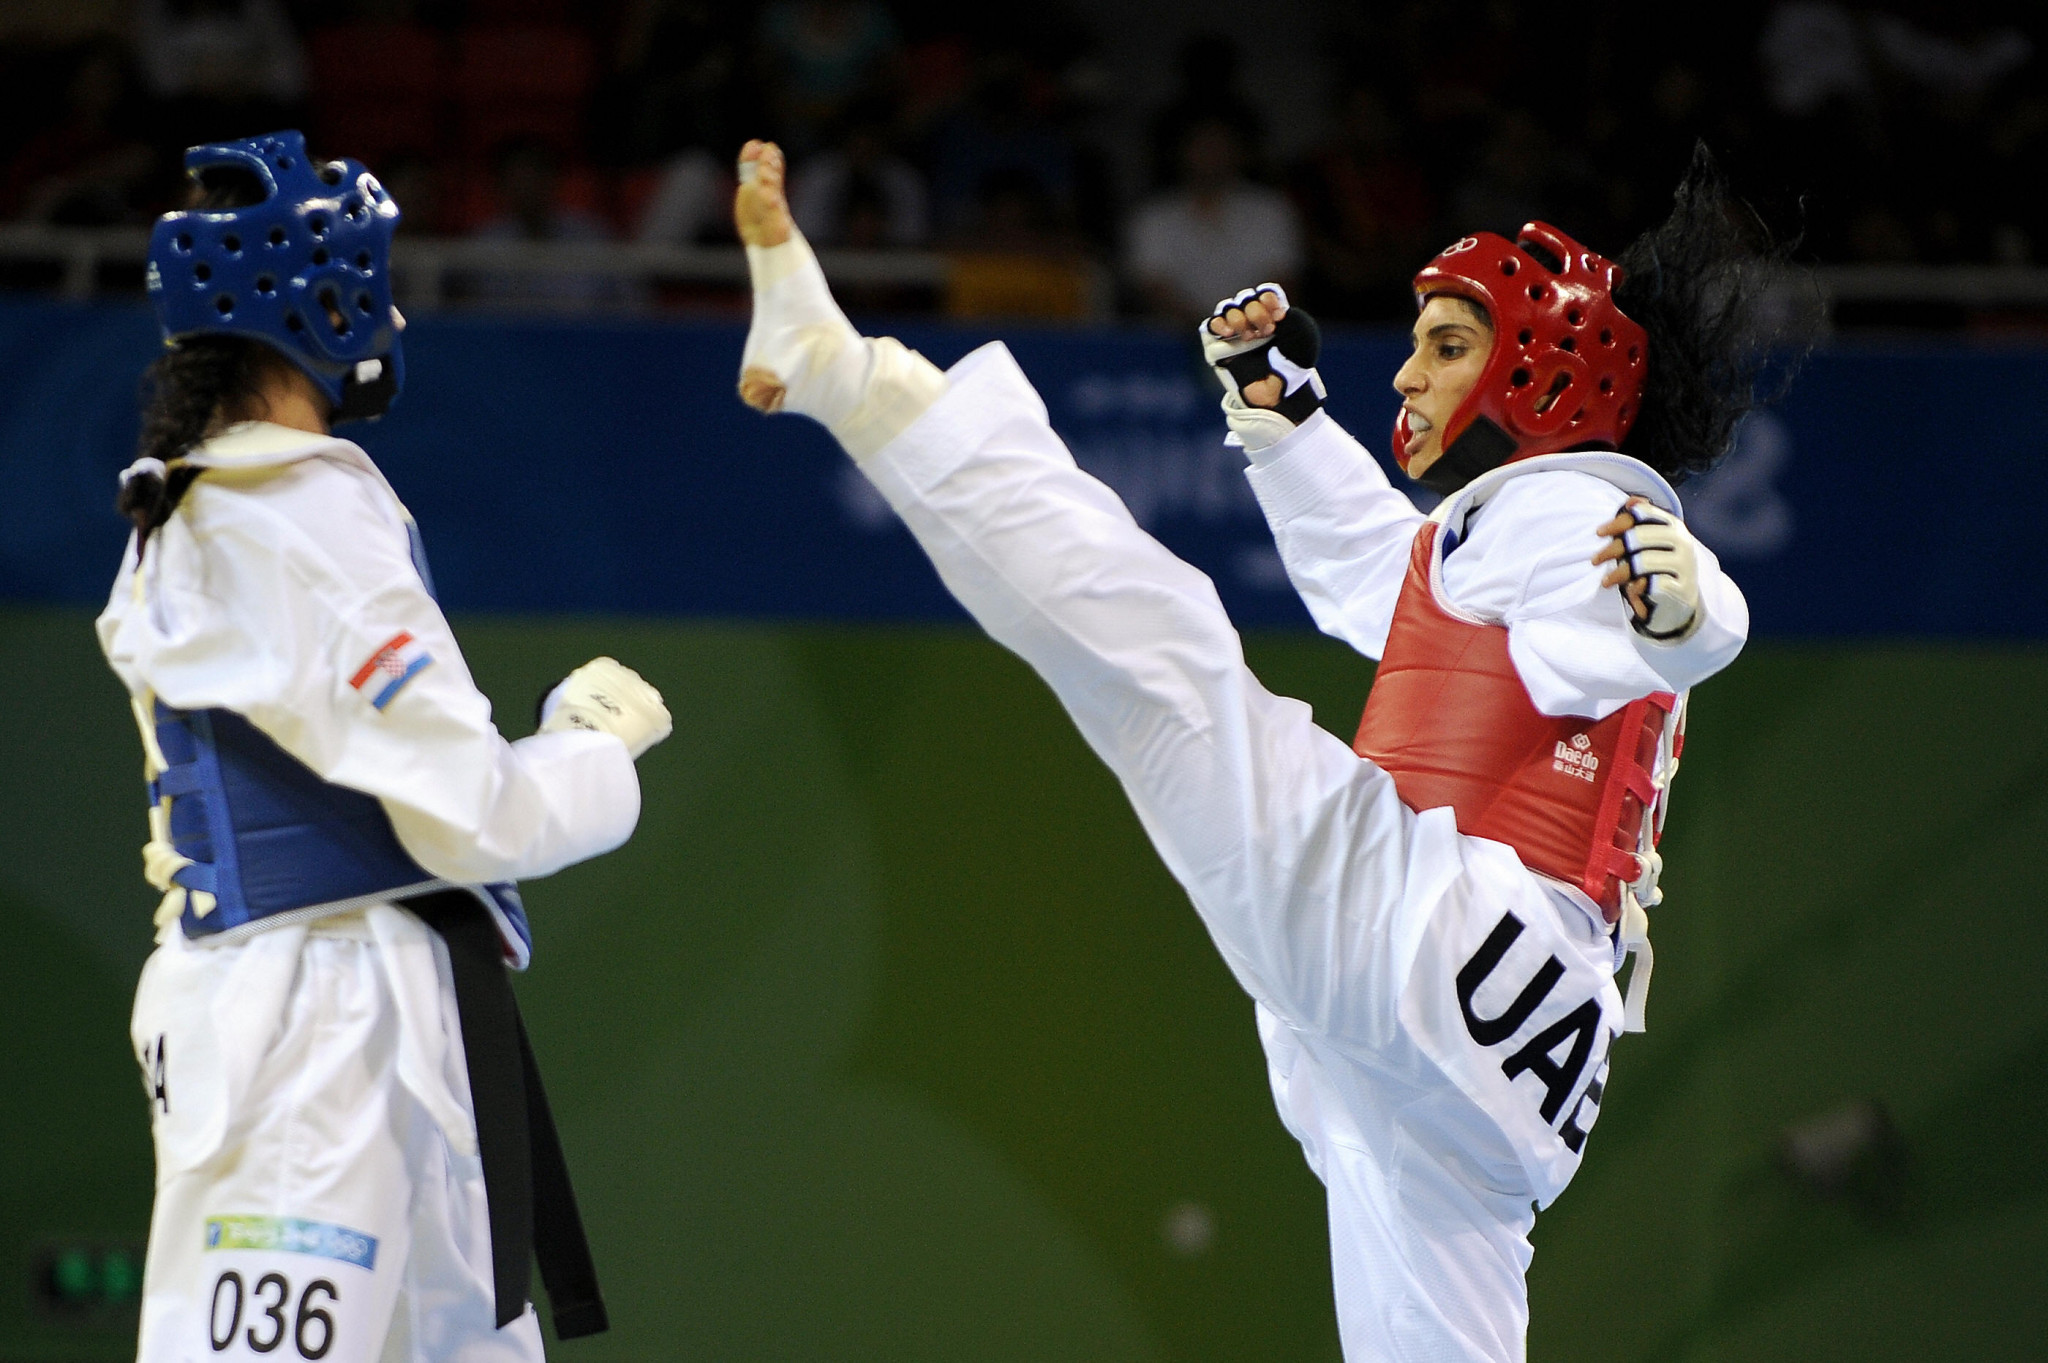 Taekwondo in the United Arab Emirates was on the agenda ©Getty Images